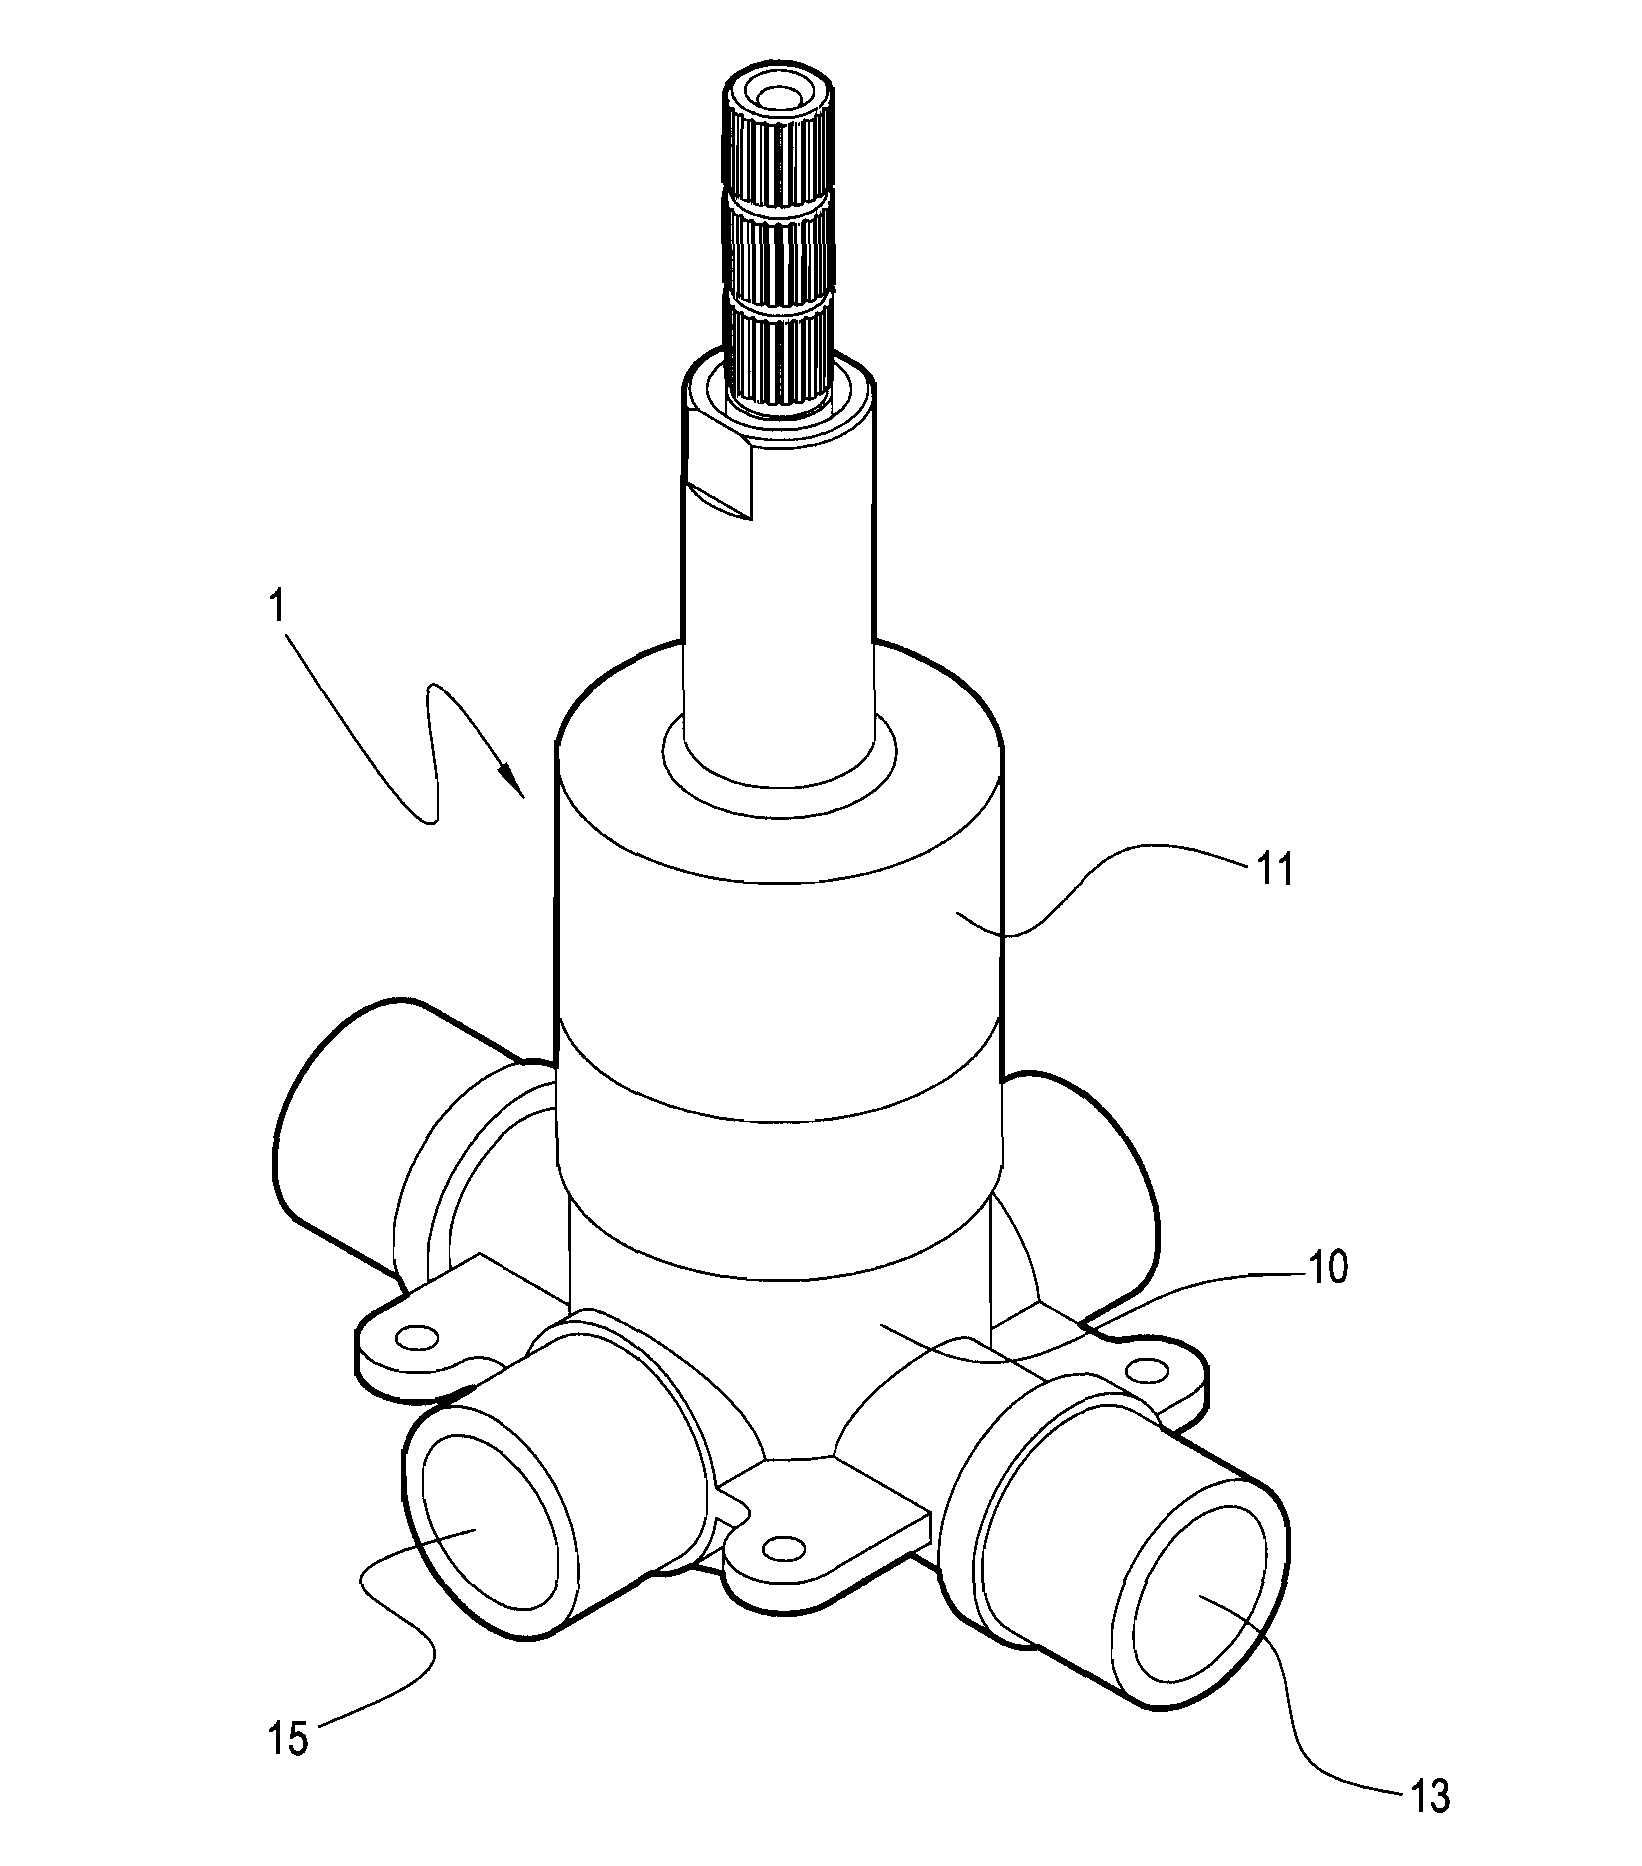 Faucet structure having pressure balance valves